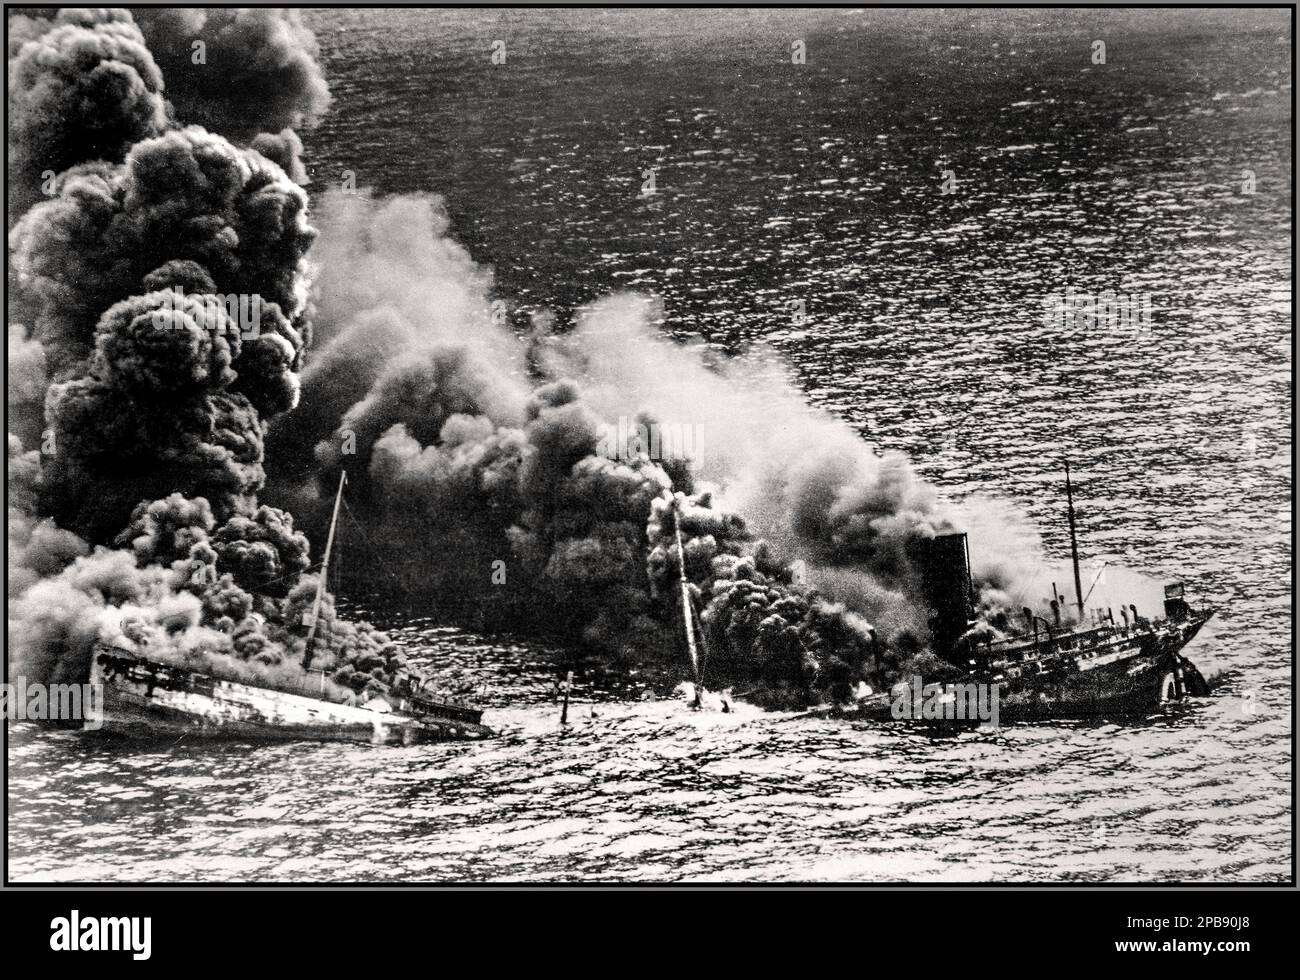 WW2 Battle of The Atlantic Nazi Submarine Torpedo Allied tanker Dixie Arrow torpedoed in Atlantic Ocean by Nazi German submarine. Ship crumbling amidship under heat of fire, settles toward bottom of ocean, 26 March 1942 Stock Photo